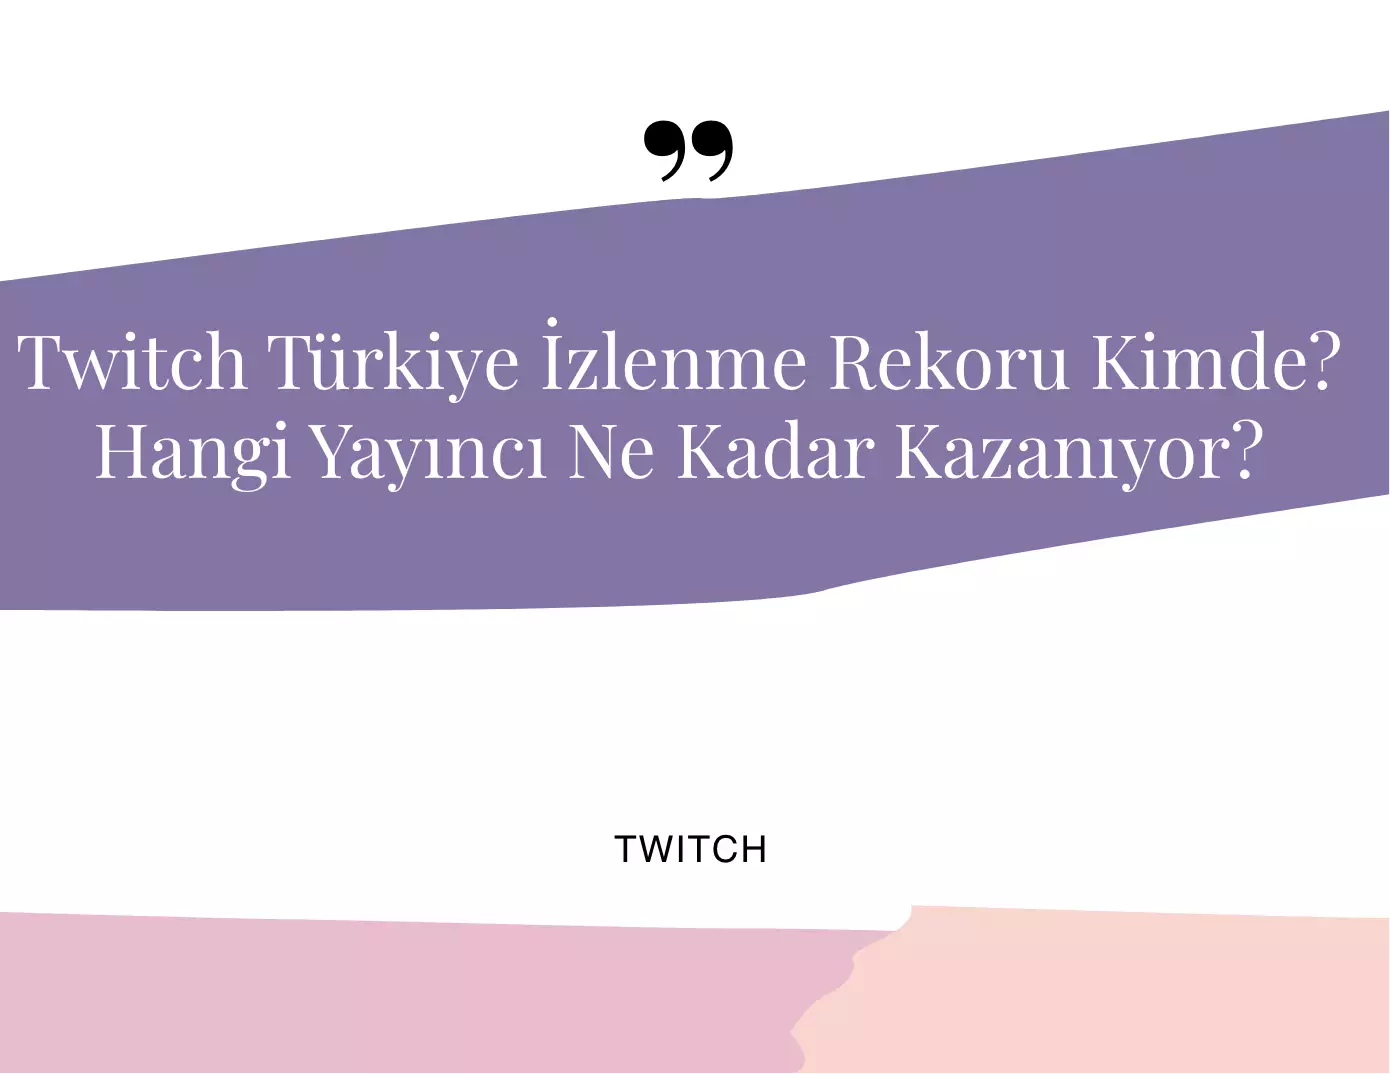 Twitch Türkiye İzlenme Rekoru Hangi Yayıncıda?